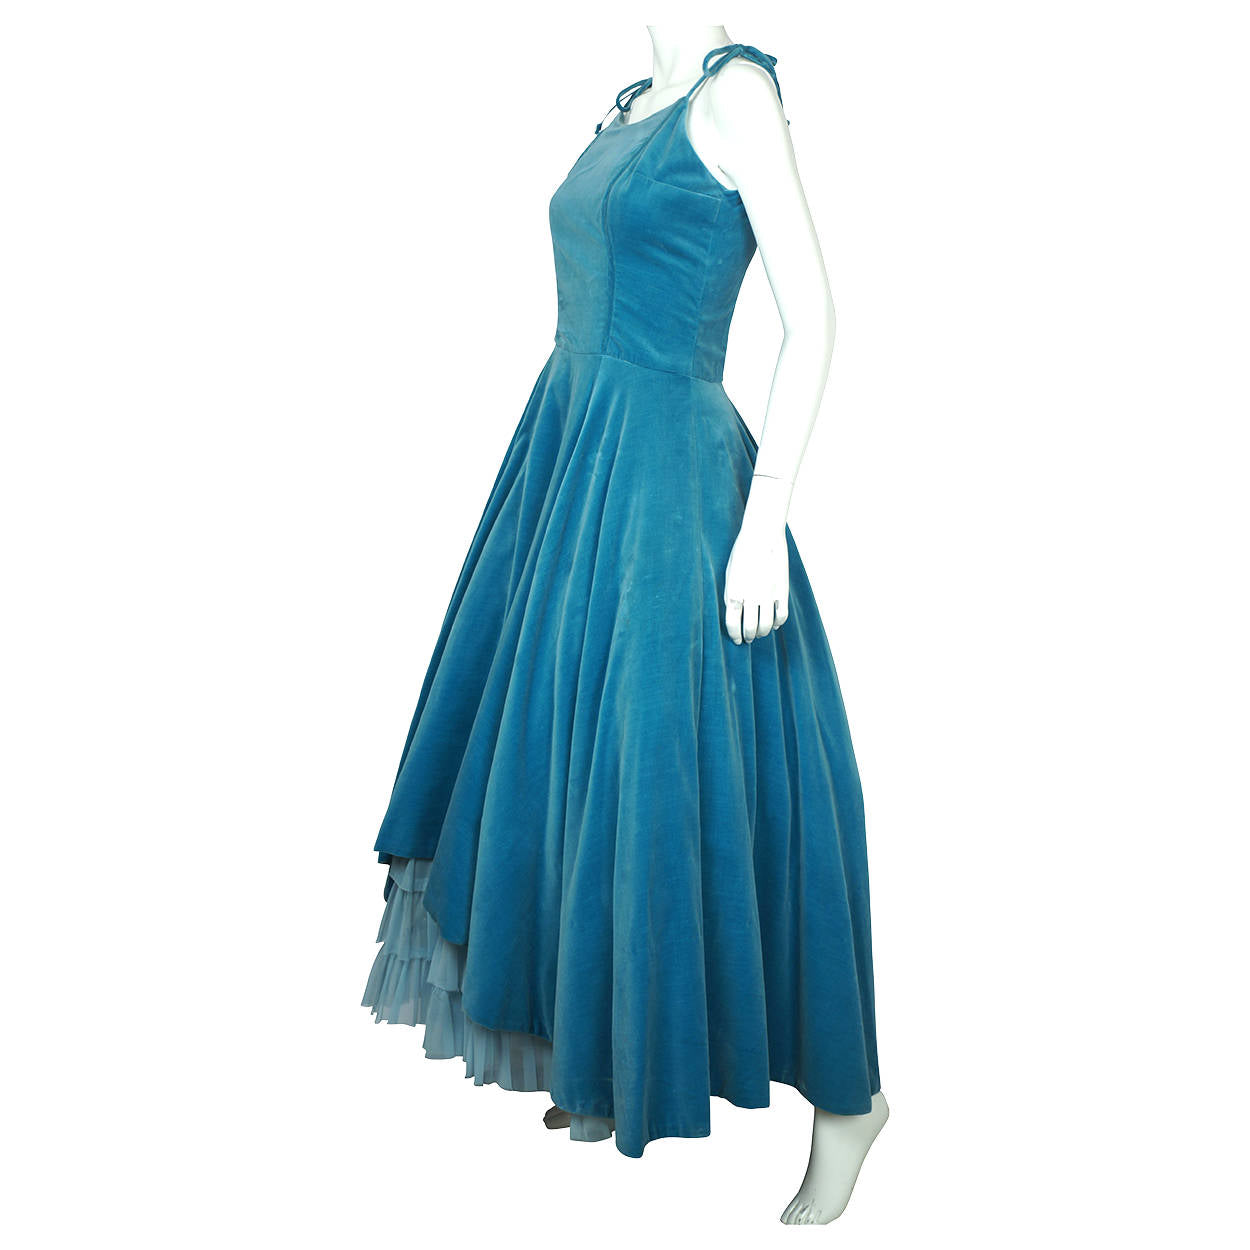 Jacques Fath 1950 Evening Gown, Strapless Dress, Robe du soir